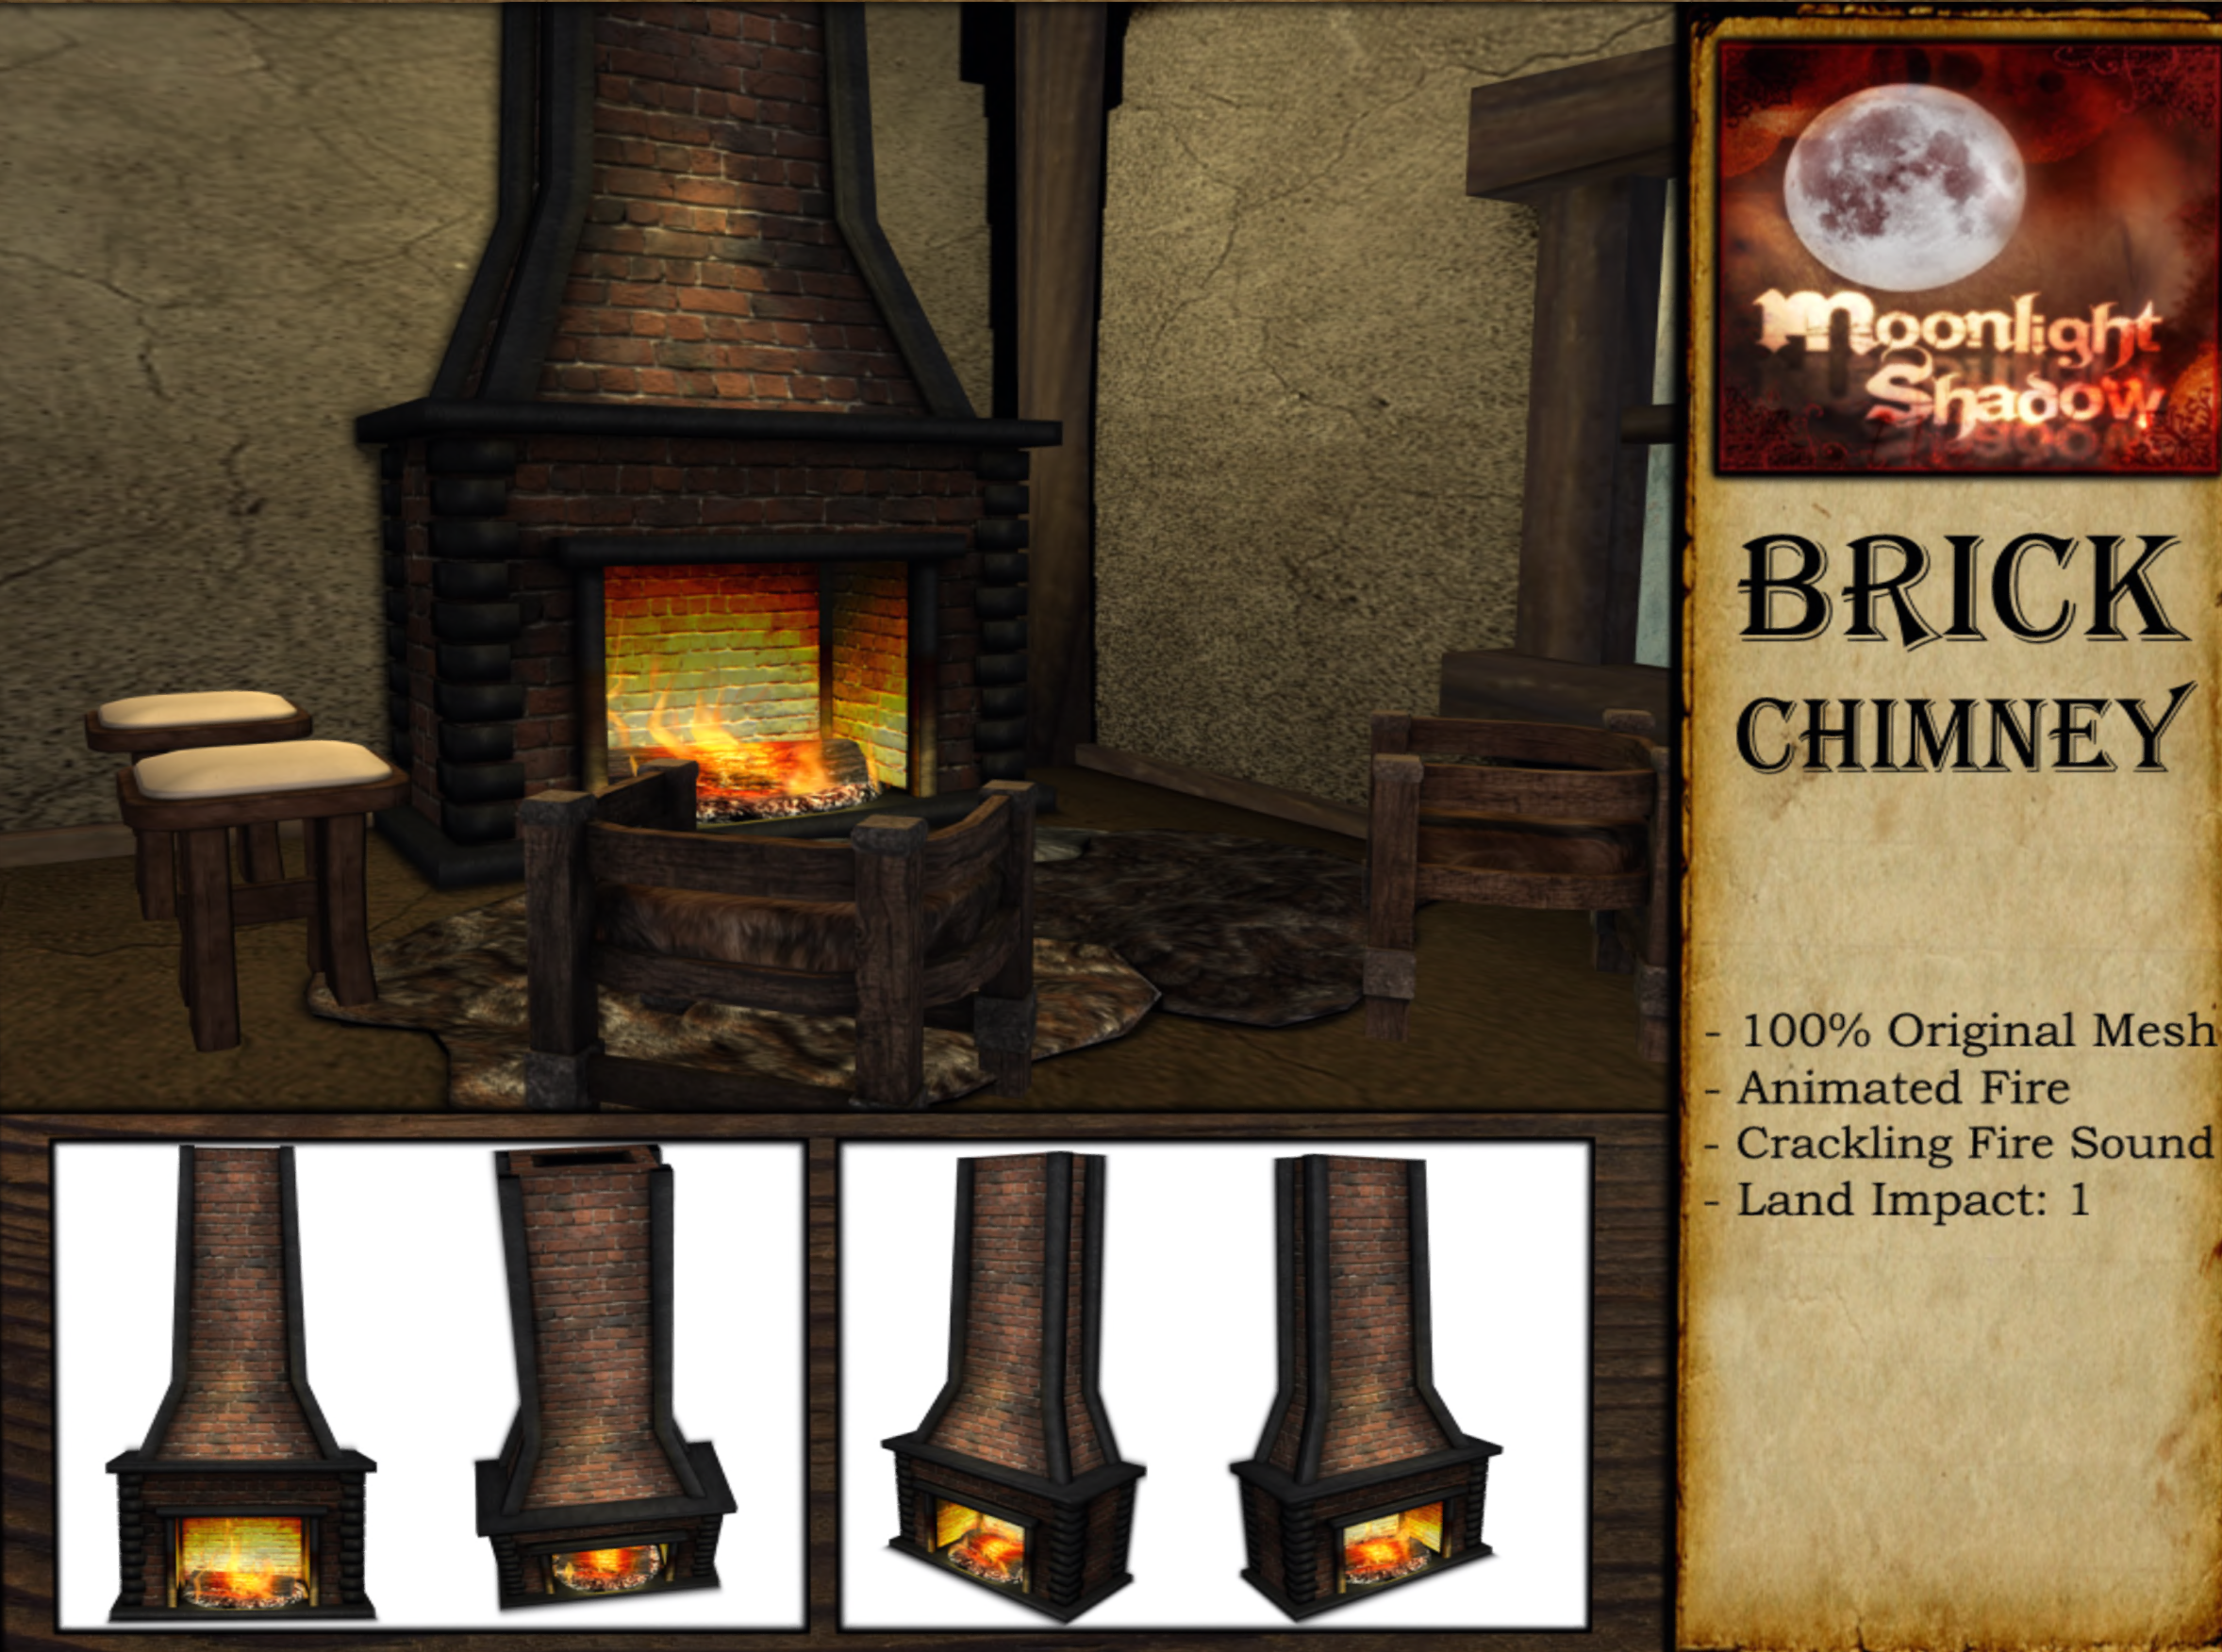 Moonlight Shadow – Brick Chimney, Stone Chimney, and Long Fireplace